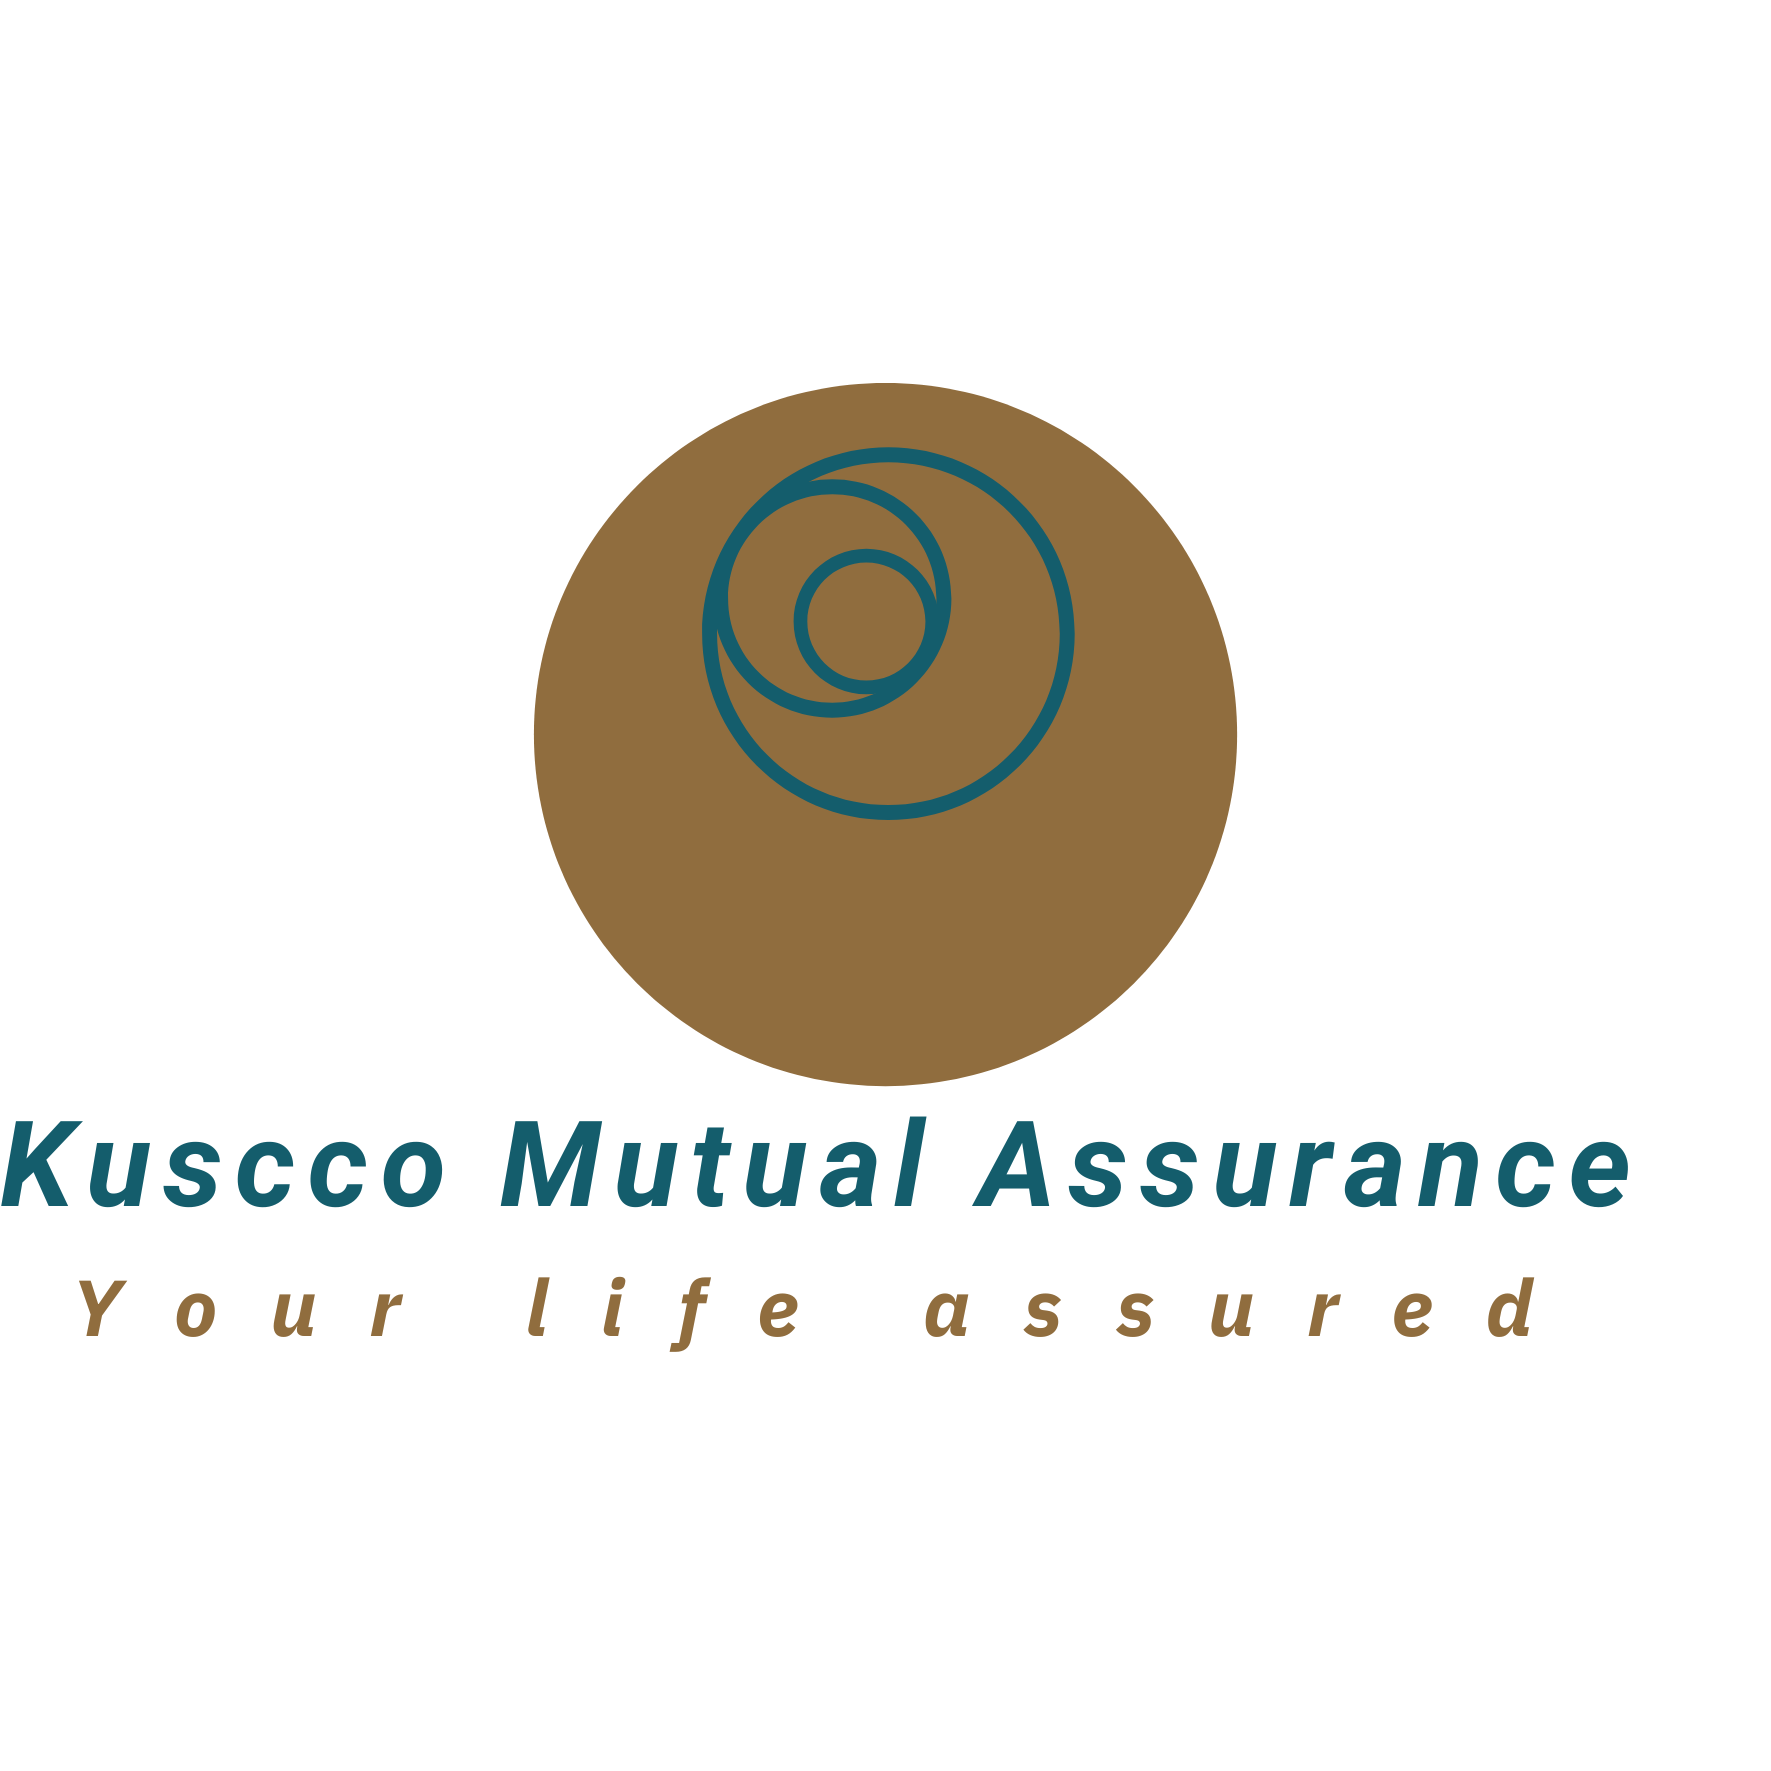 Kussco Mutual  Bronze  Sponsor